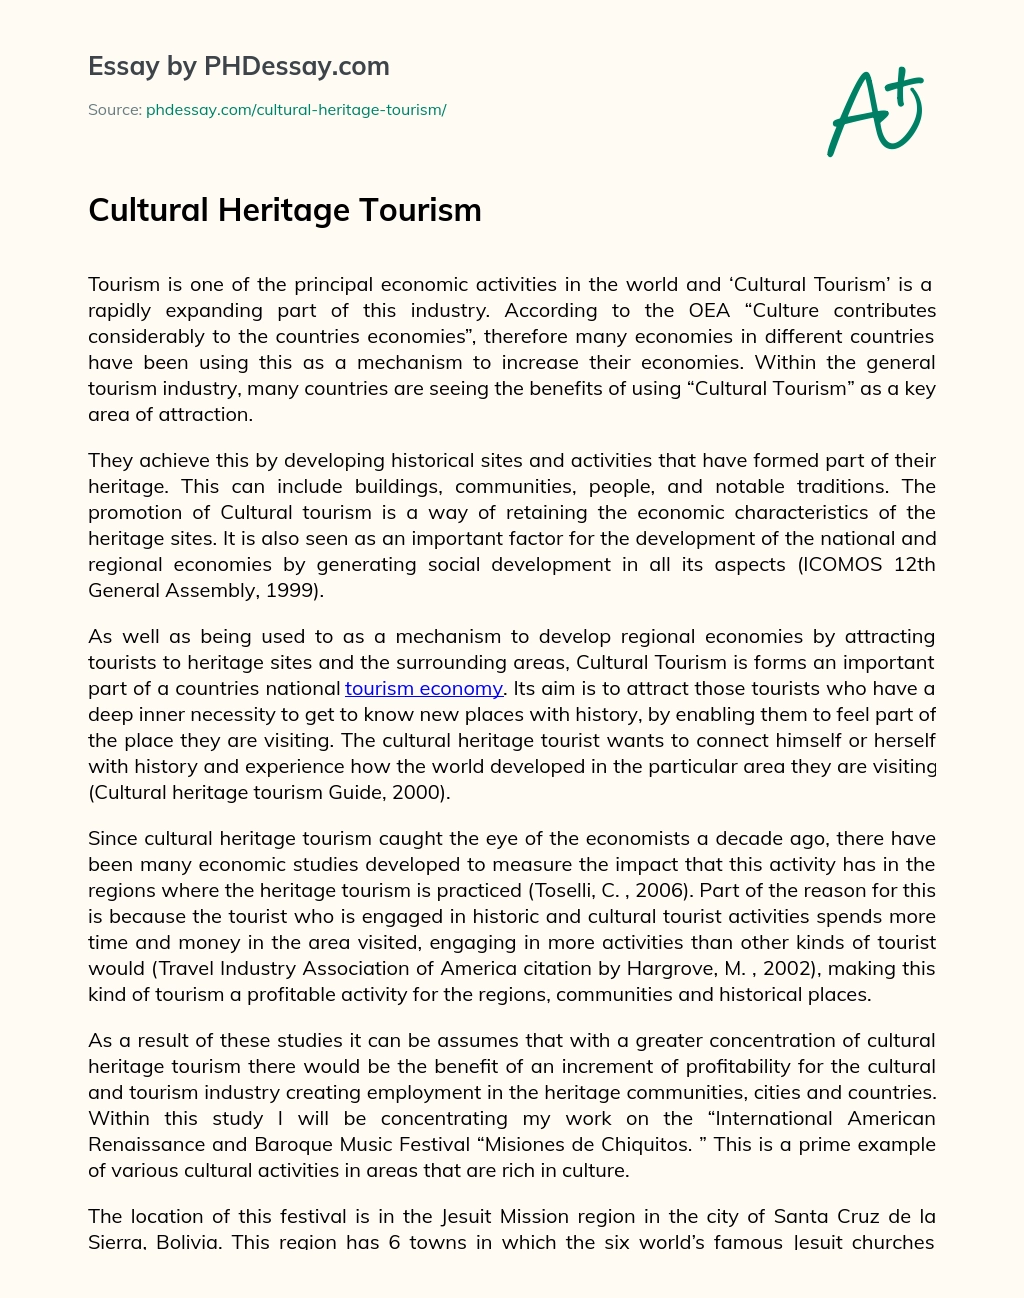 Cultural Heritage Tourism essay